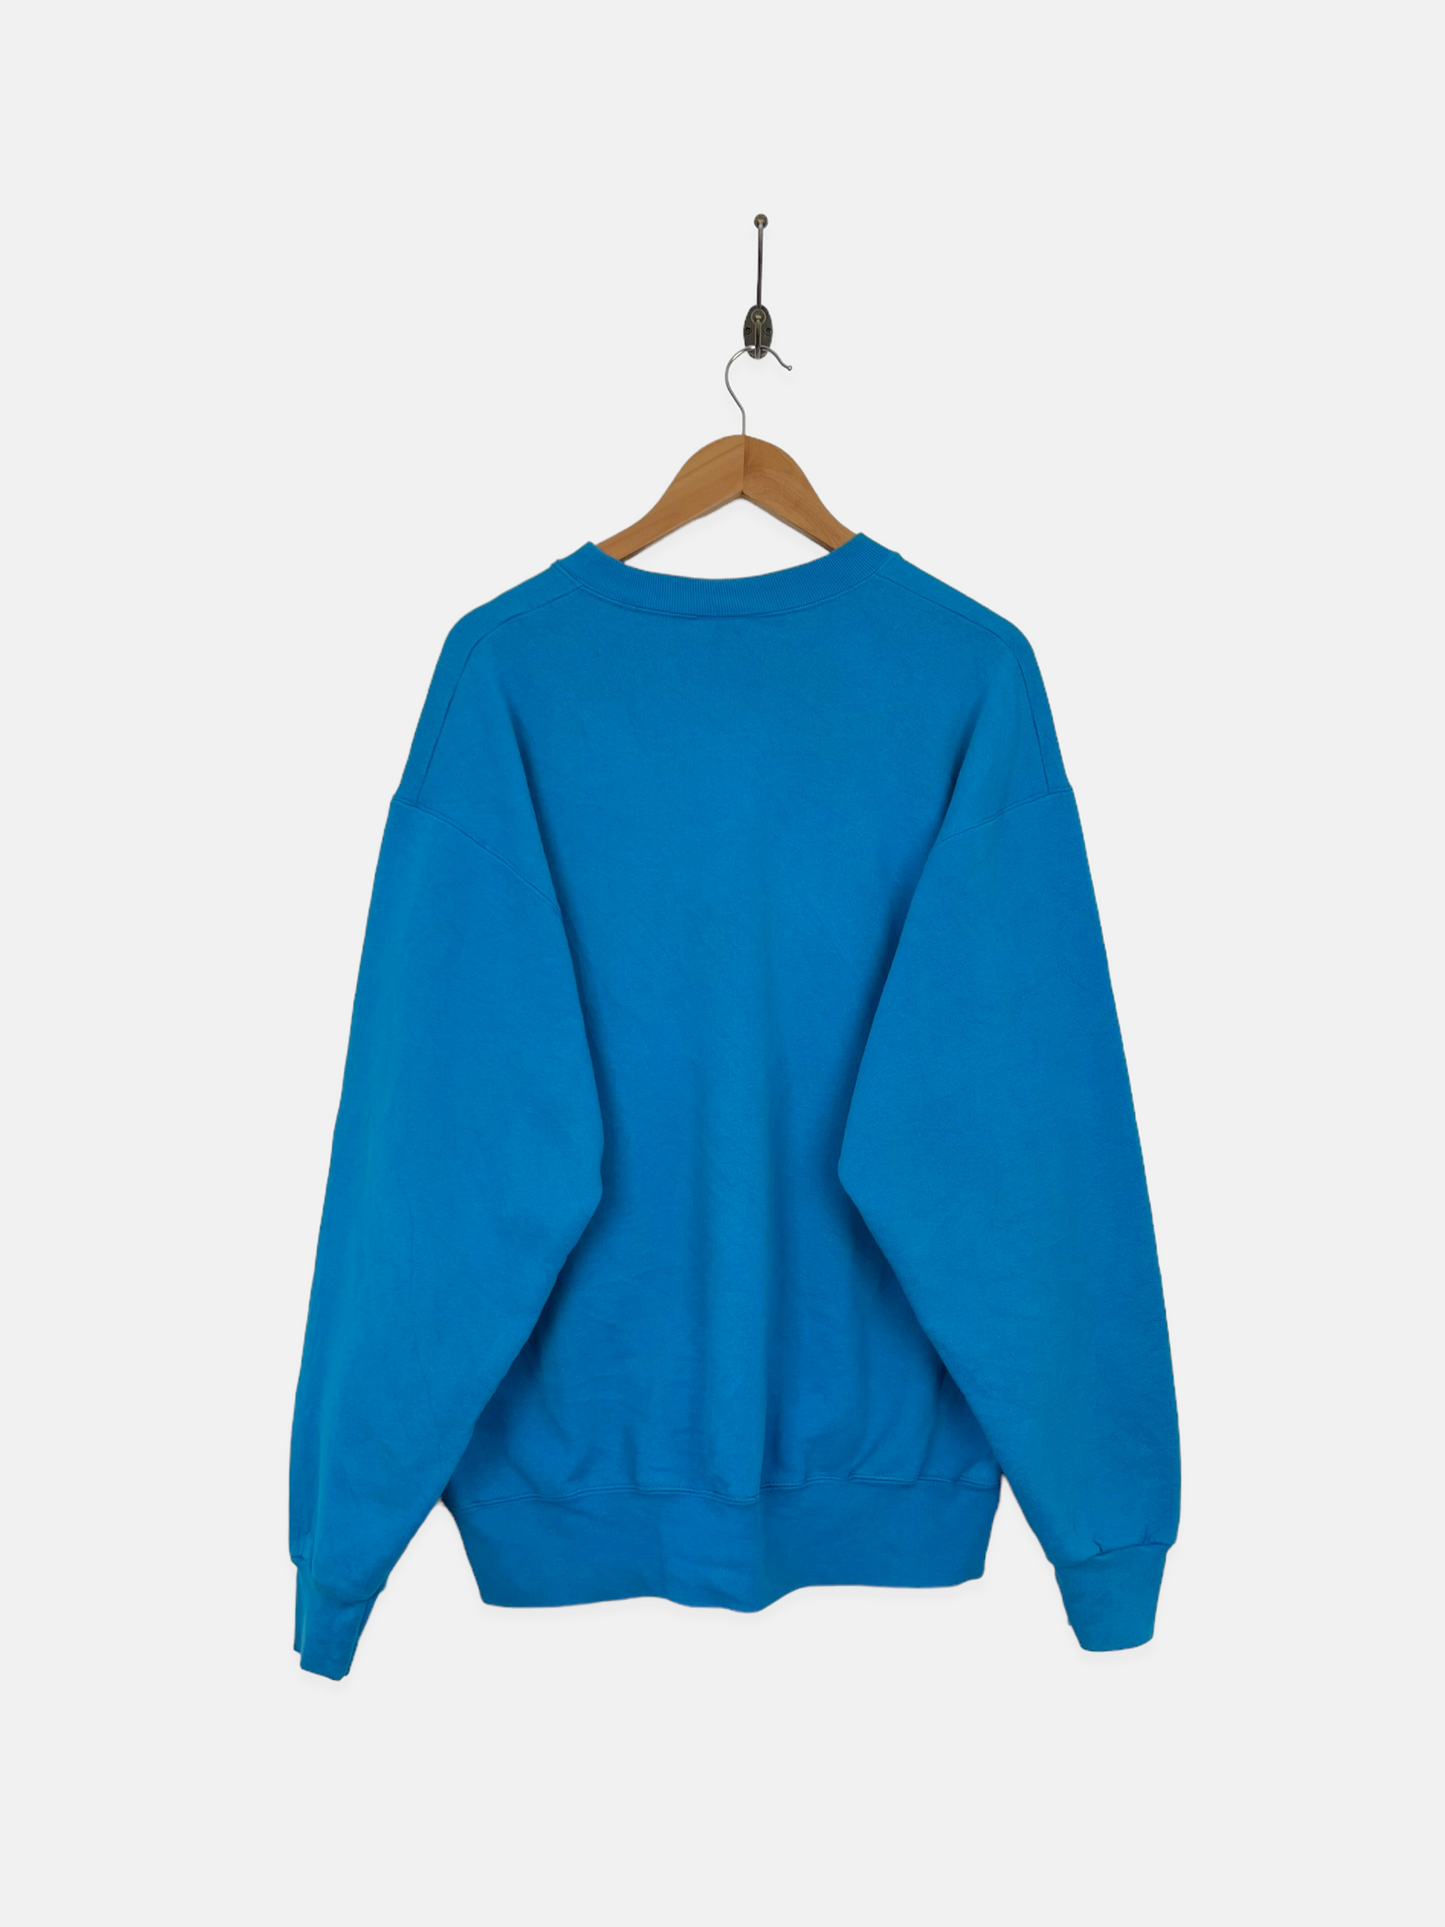 1997 Carolina Panthers NFL USA Made Vintage Sweatshirt Size XL